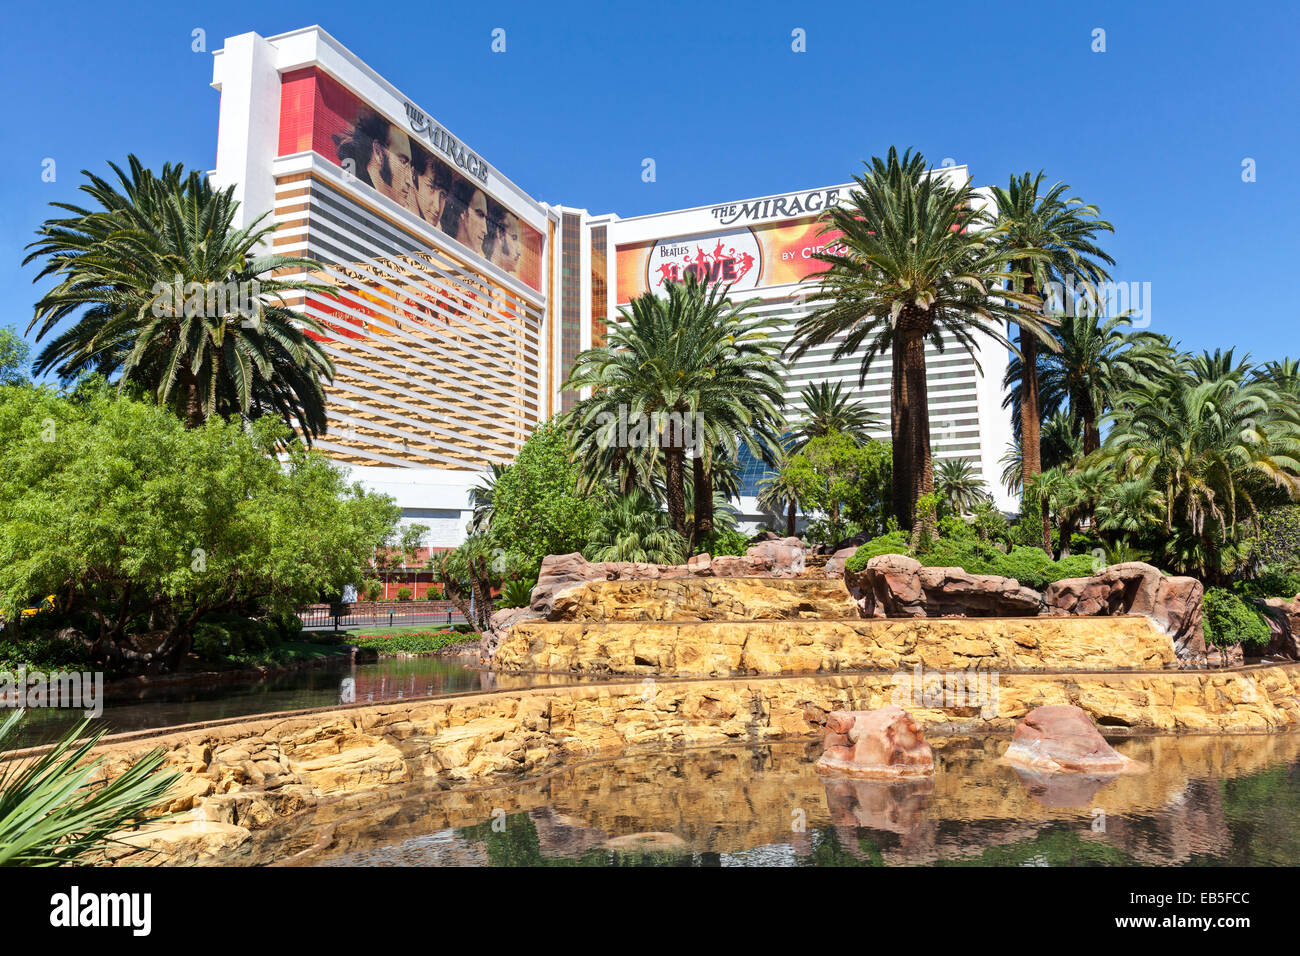 Hotels, Resorts and Casinos on the Las Vegas Blvd, Las Vegas, Nevada. Stock Photo